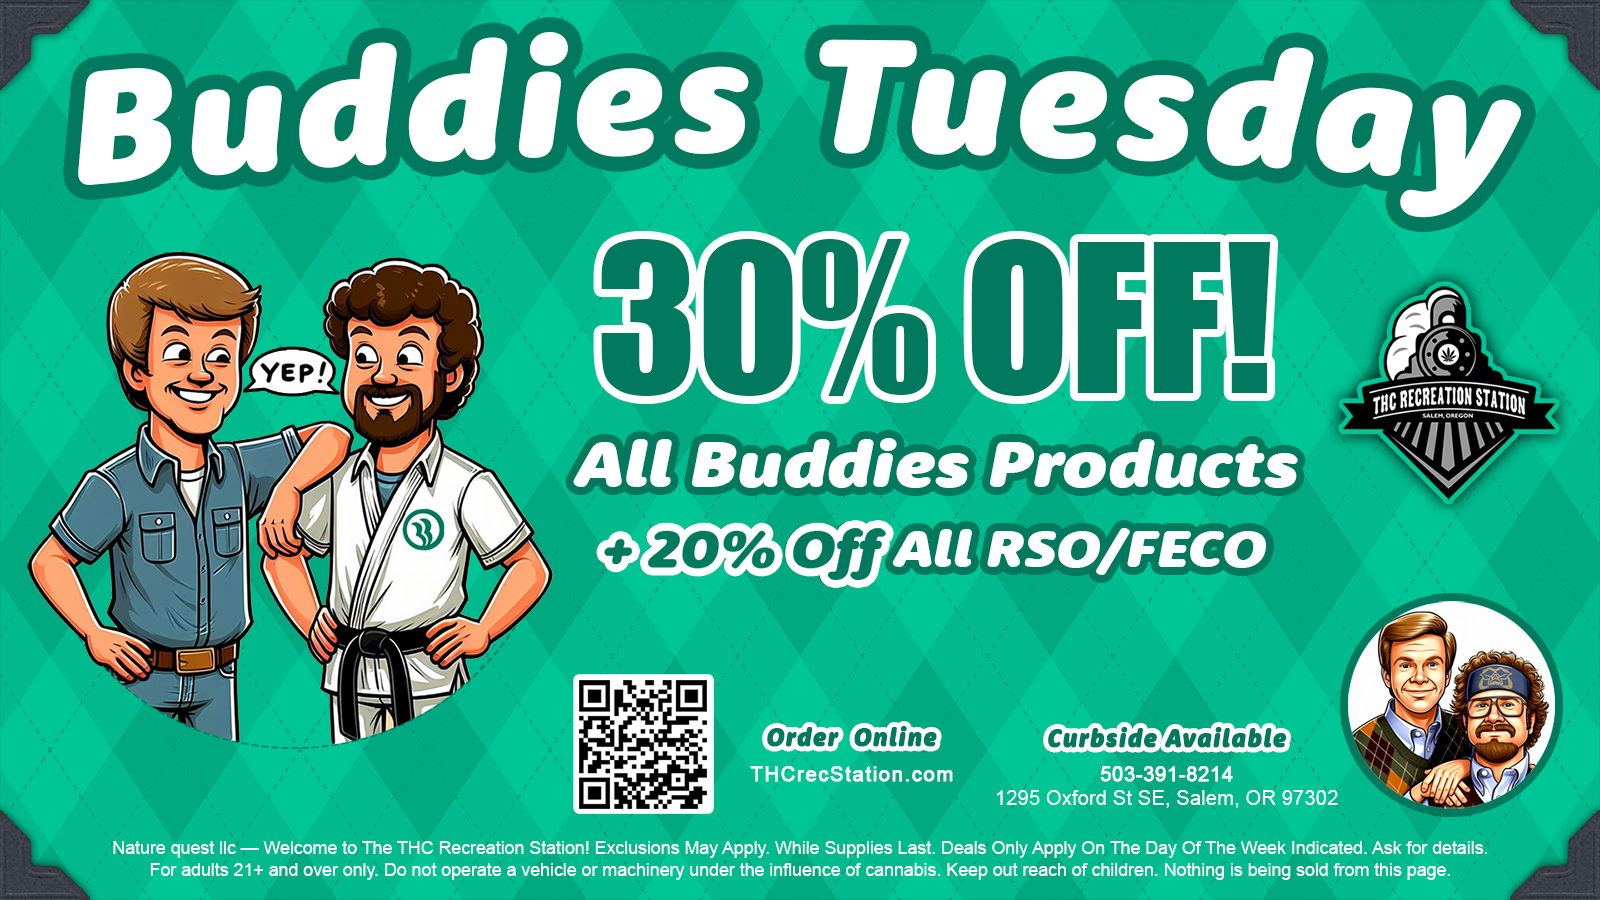 Buddies Tuesday Cannabis Sale - Save 30% On All Buddies Brand Products + Save 20% On All RSO/FECO Products Storewide! - THC Recreation Station, Salem, Oregon's Best Cannabis Dispensary